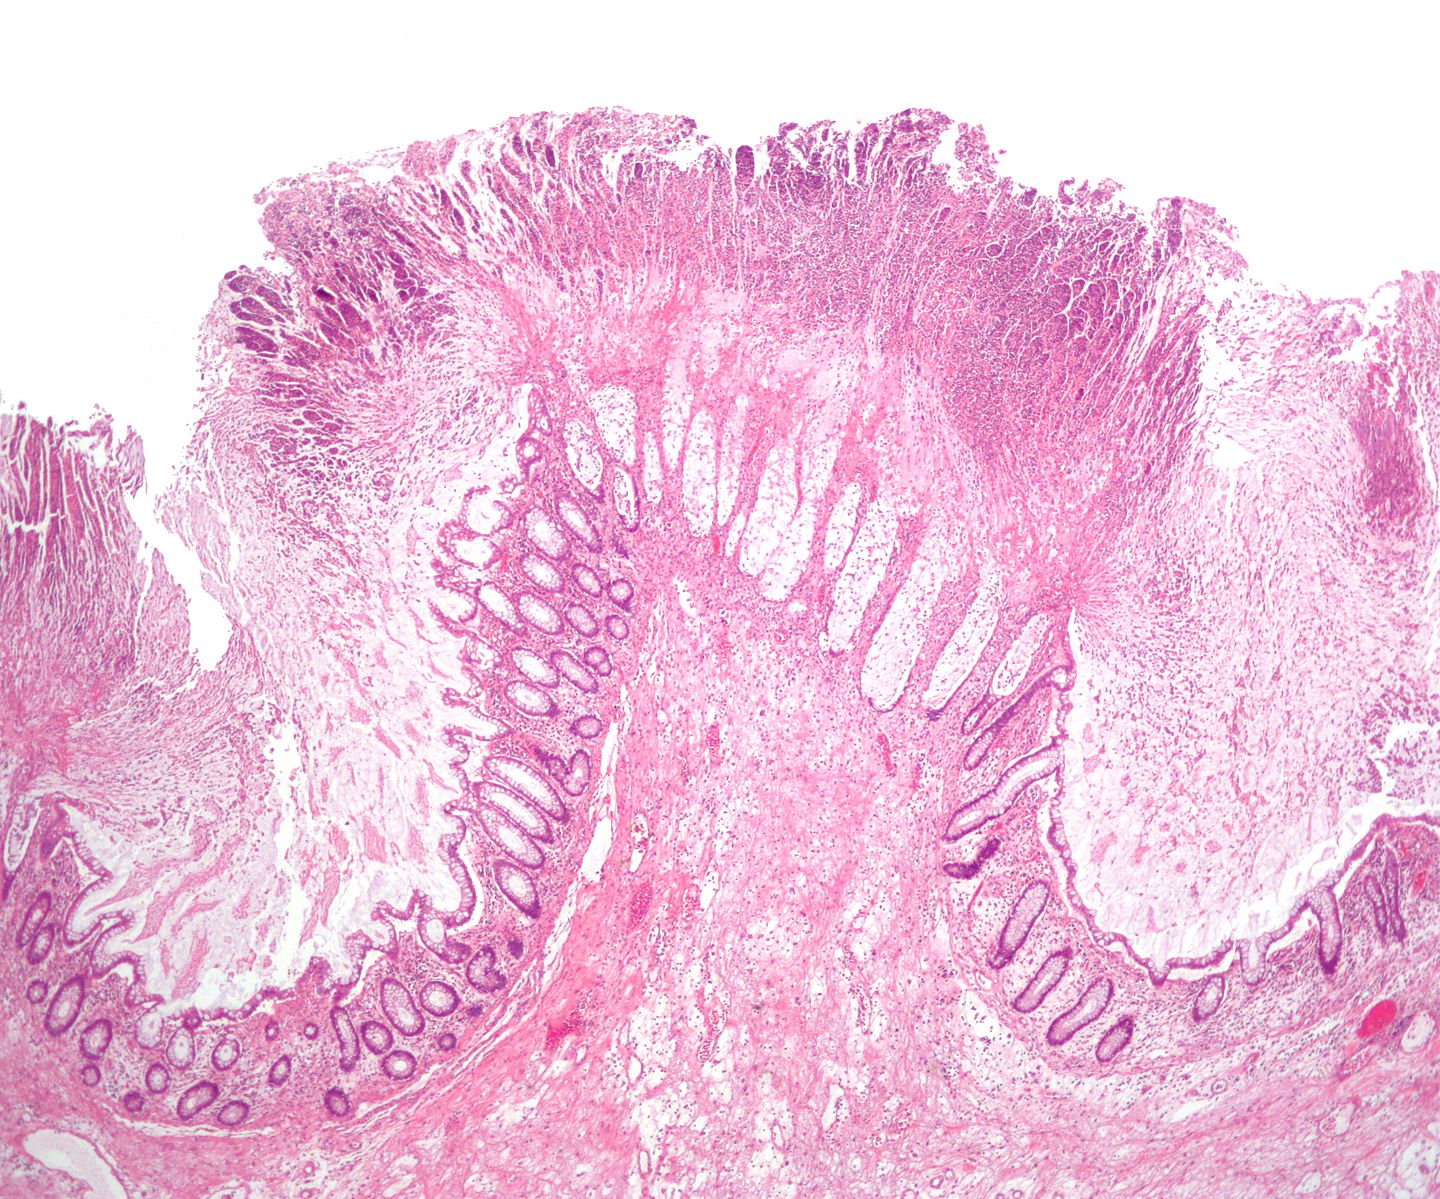 Pseudomembranous colitis. H& E staining showing pseudomembranes in Clostridium colitis [20]